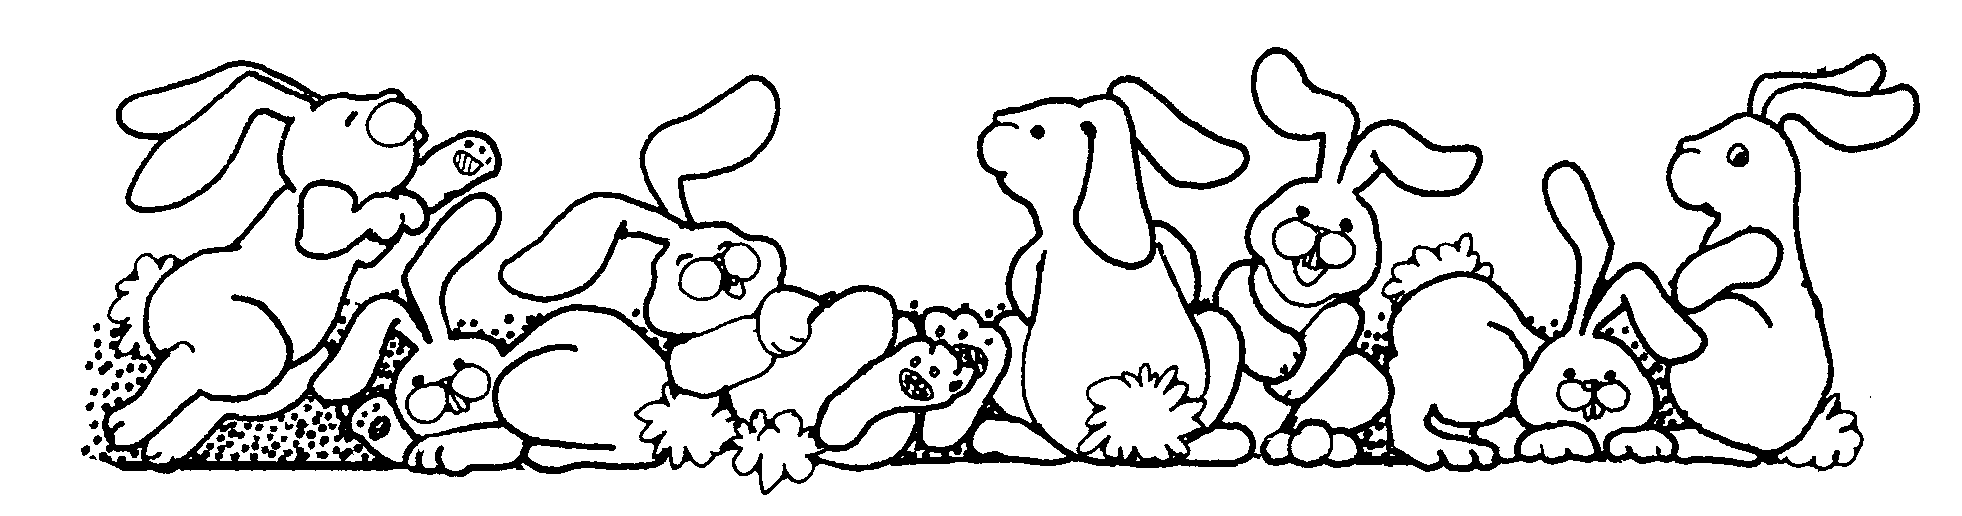 clipart bunny group